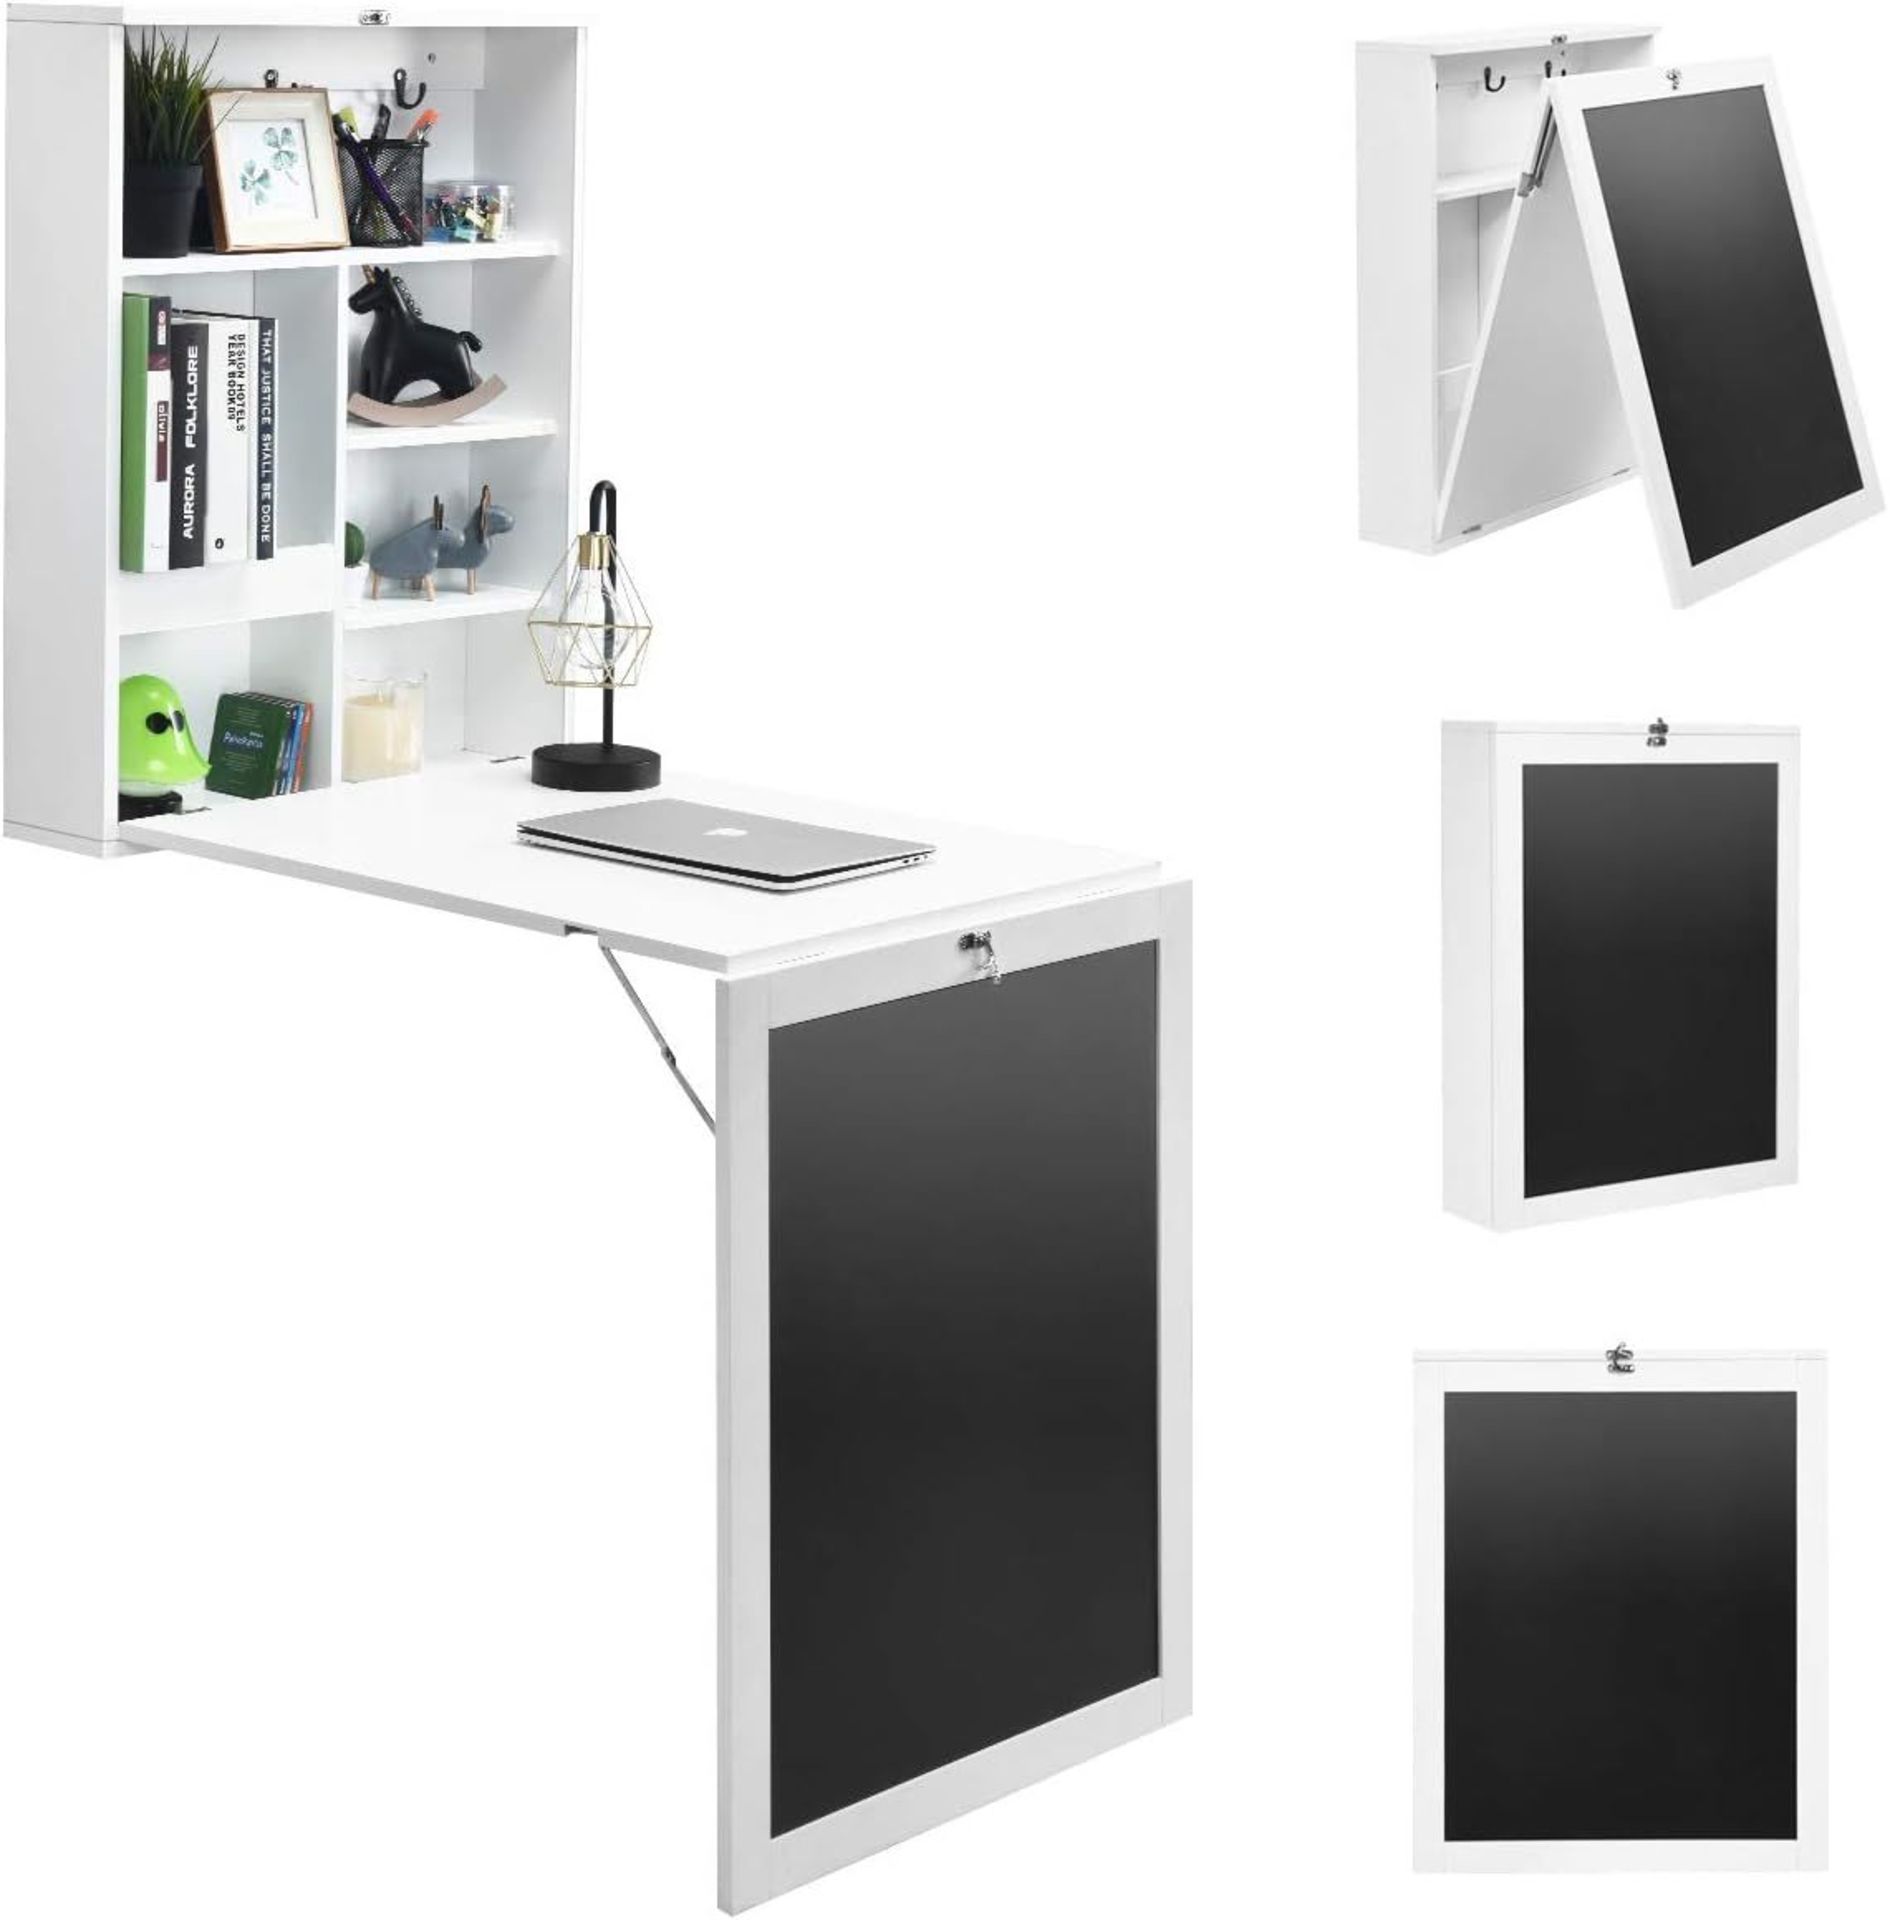 Folding Wall Desk, Wall Mounted Fold Out Desk with Storage Shelves & Hooks, Hideaway Desk Wall Mount